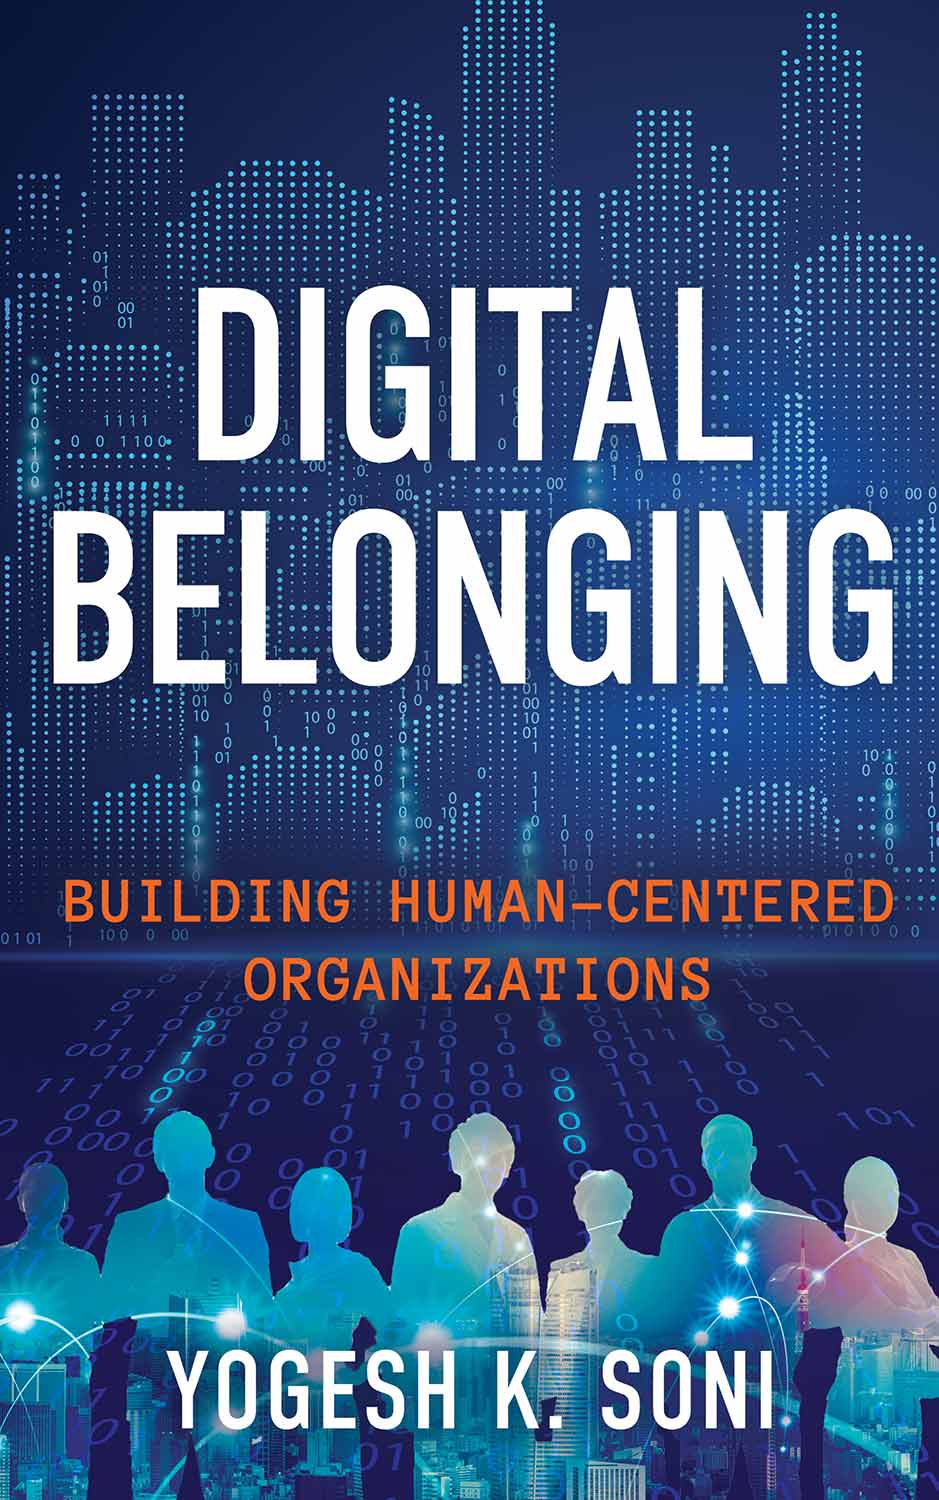 Digital Belonging - Building Human-Centered Organizations by Yogesh Soni